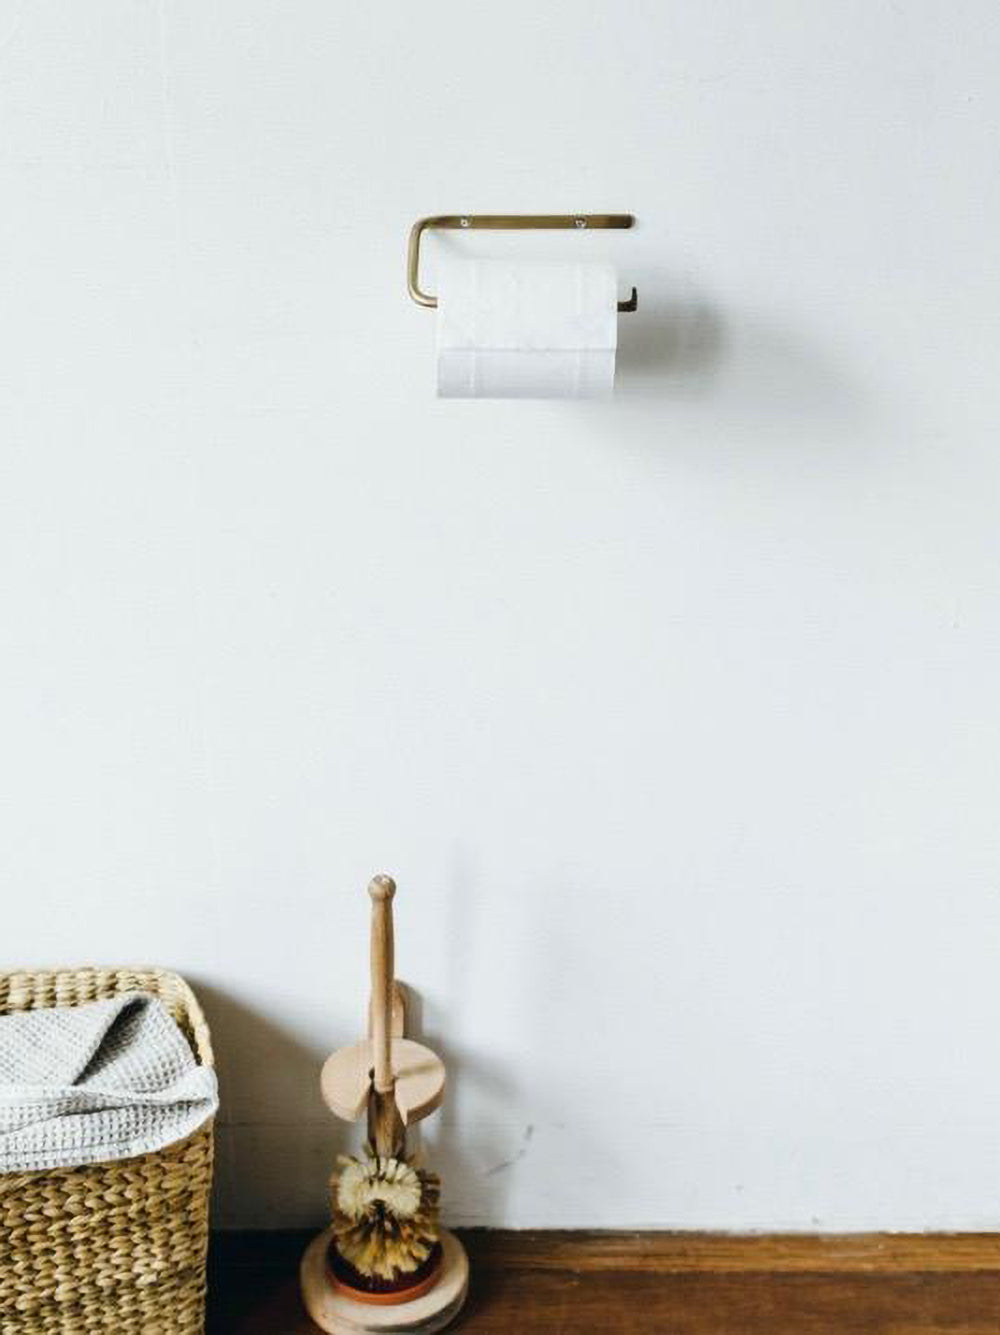 Screw-In Wall Mount Toilet Paper Holder